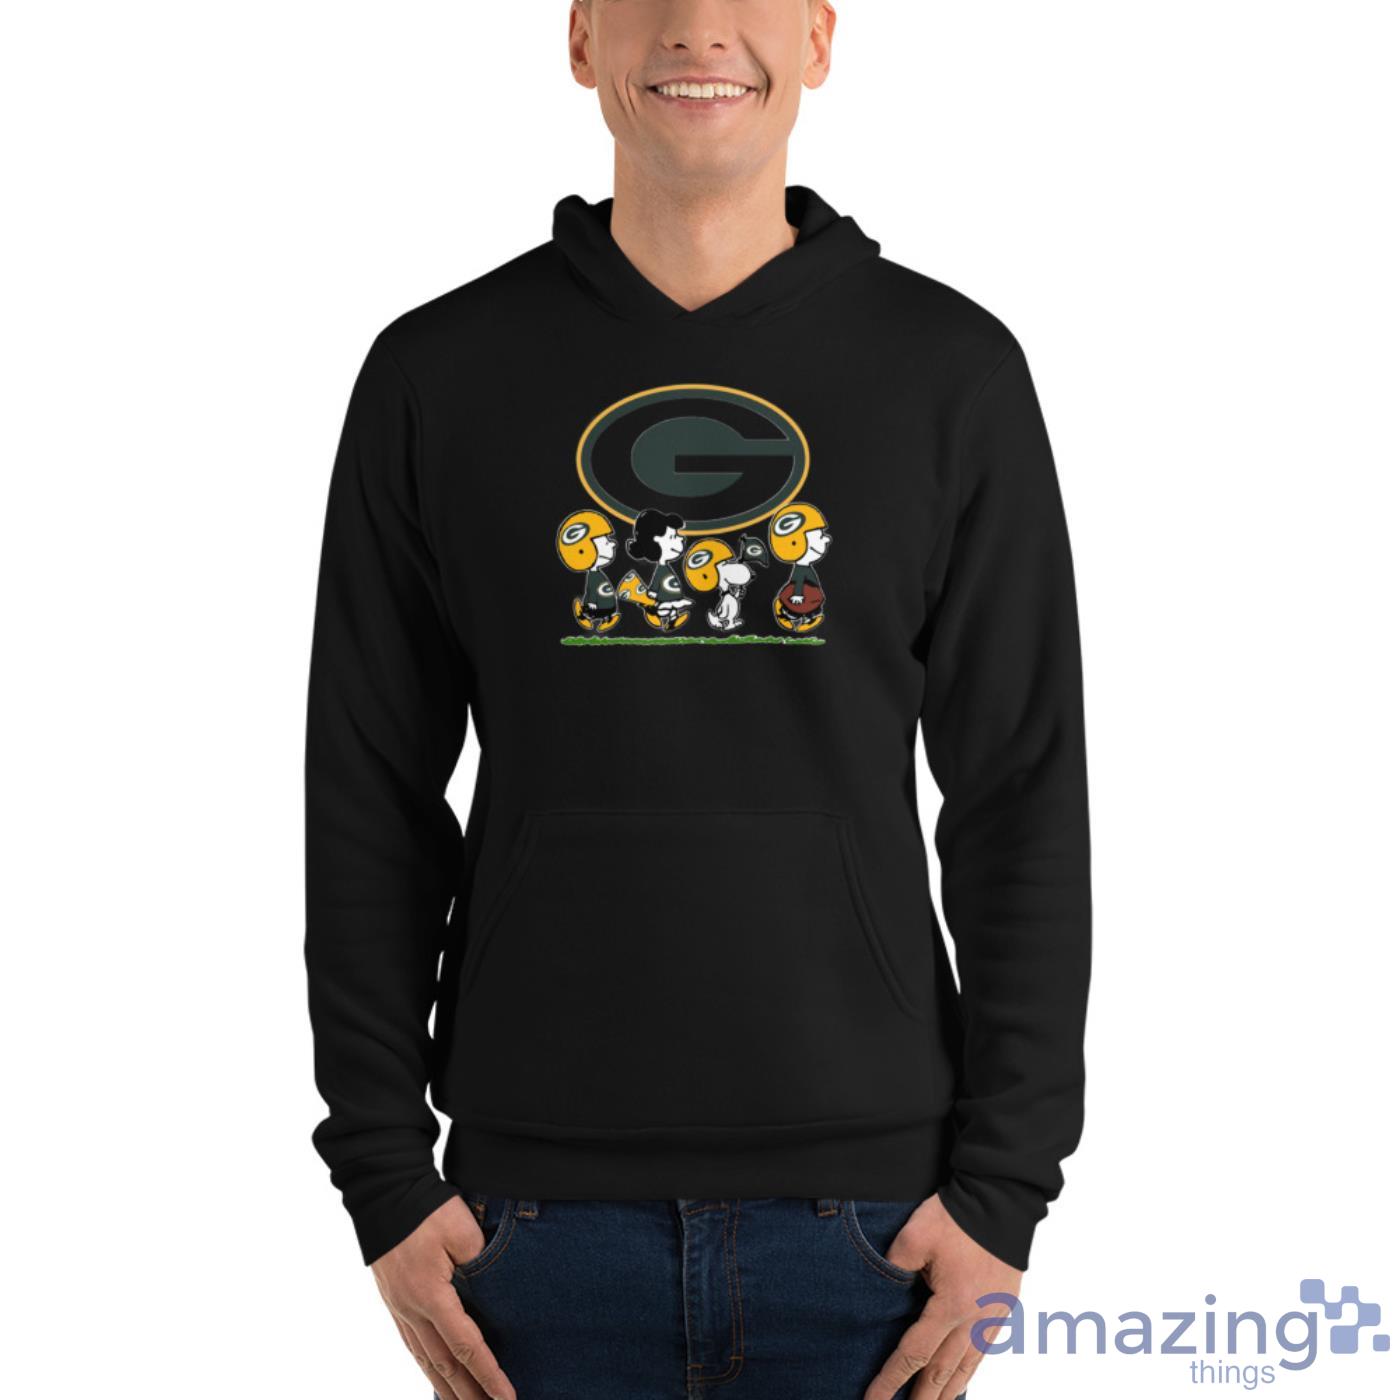 Green Bay Packers NFL Team Apparel Boys Size 4T Full Zip Light Sweatshirt